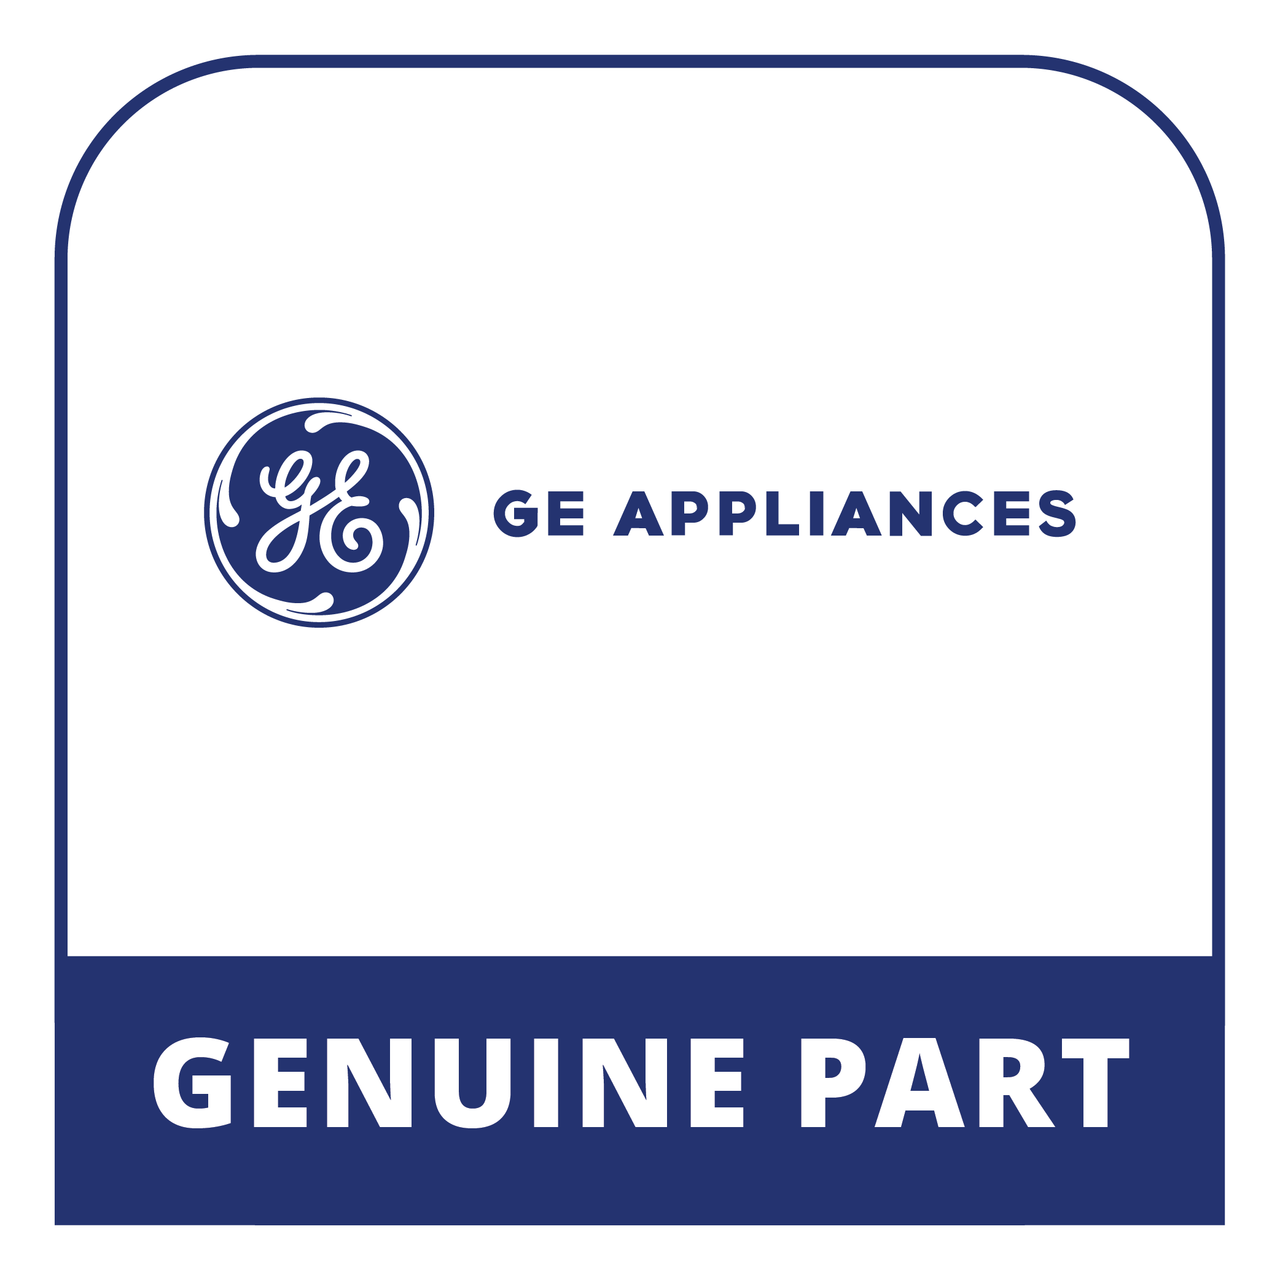 GE Appliances WR49X43528 - Right Door Hinge Kit - Adjustable - Genuine Part